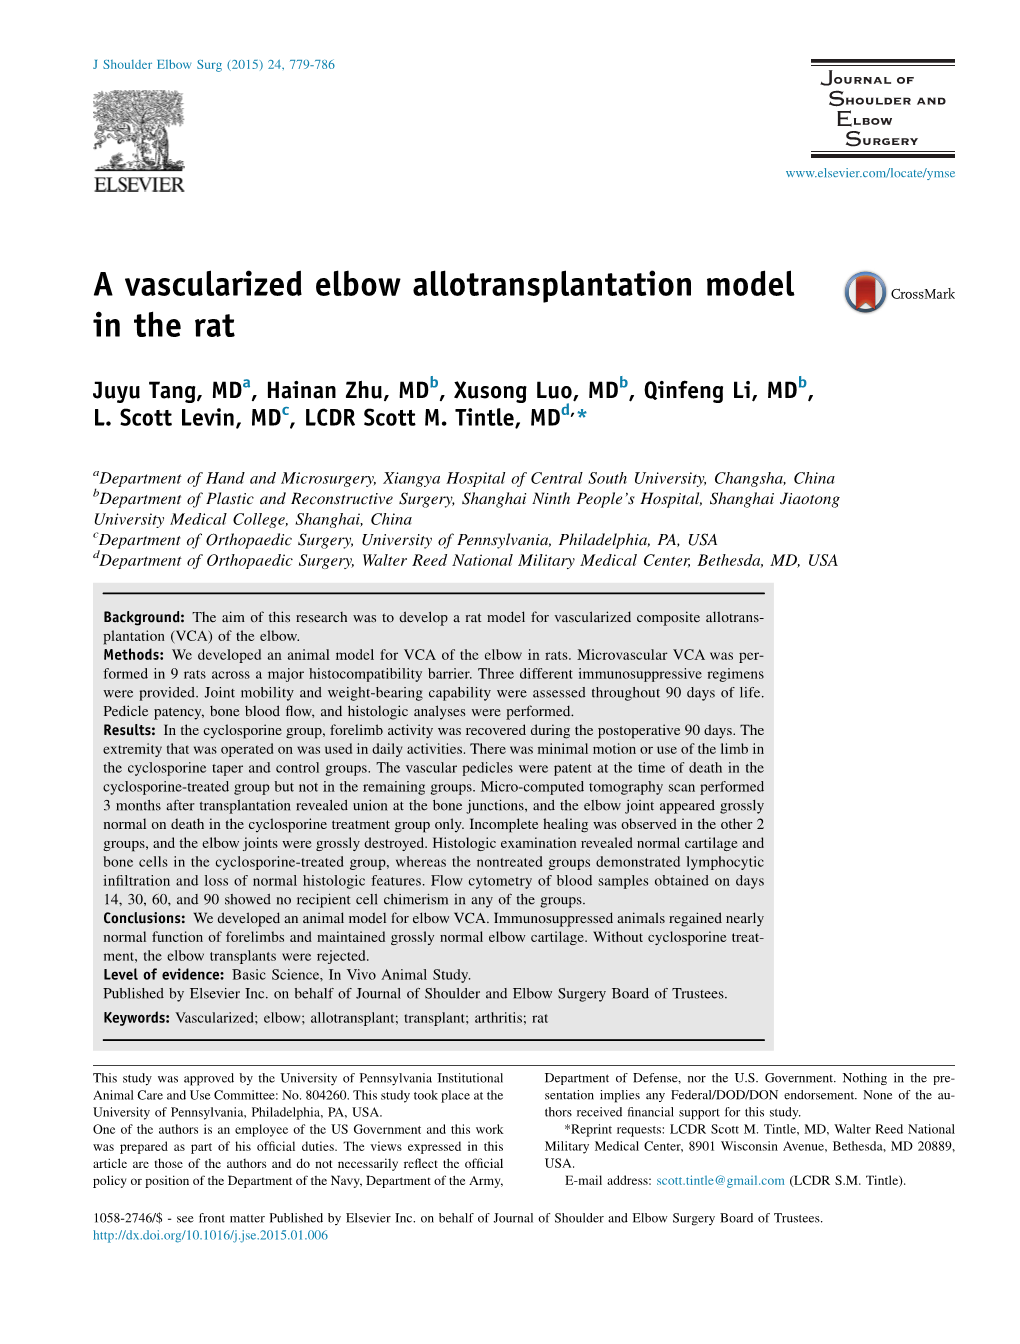 A Vascularized Elbow Allotransplantation Model in the Rat